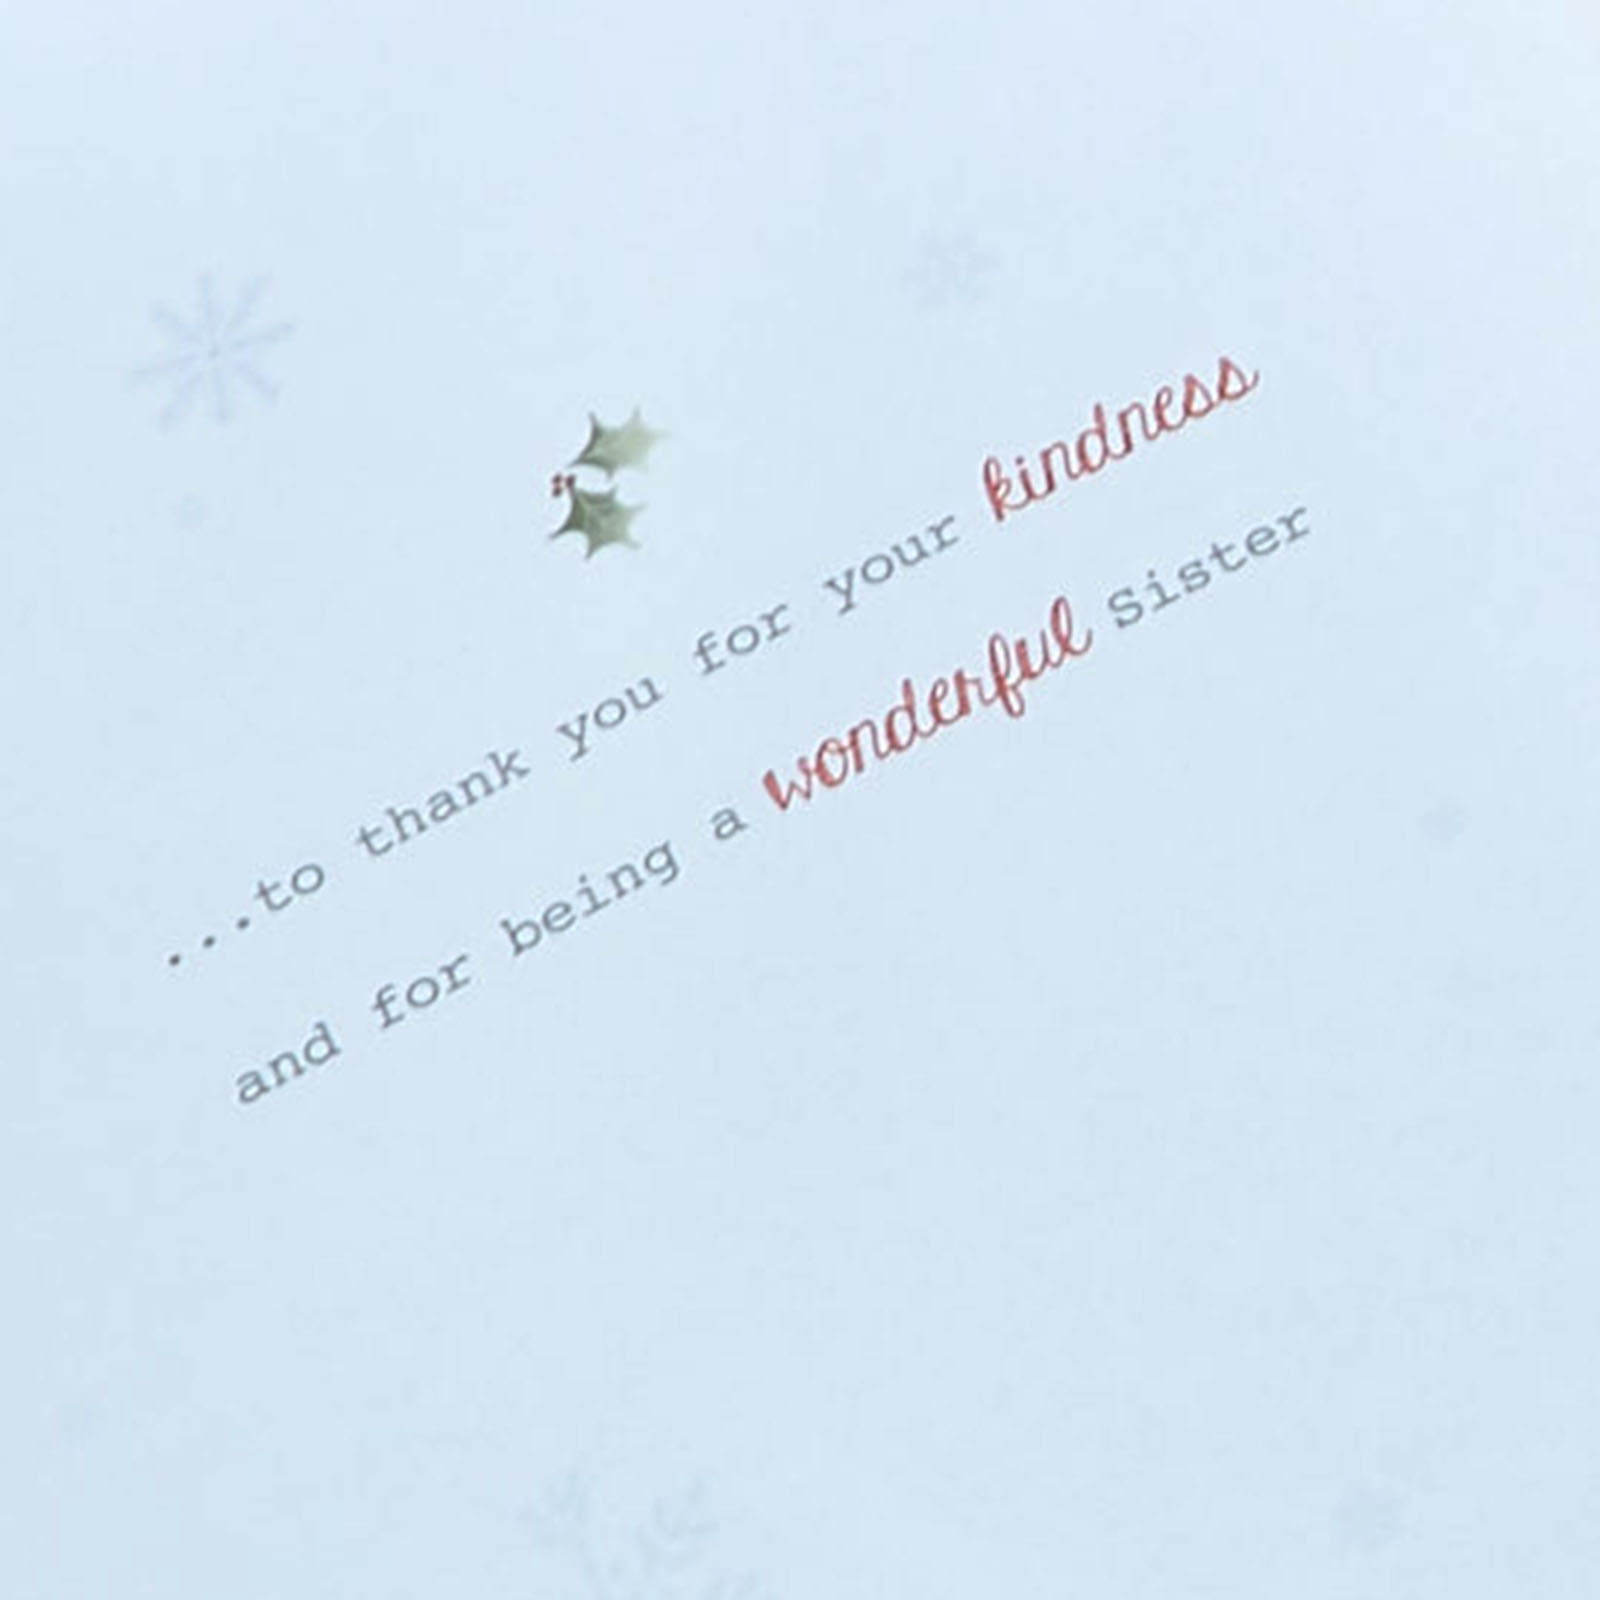 Christmas Card - Just For You Sister Hedgehog 